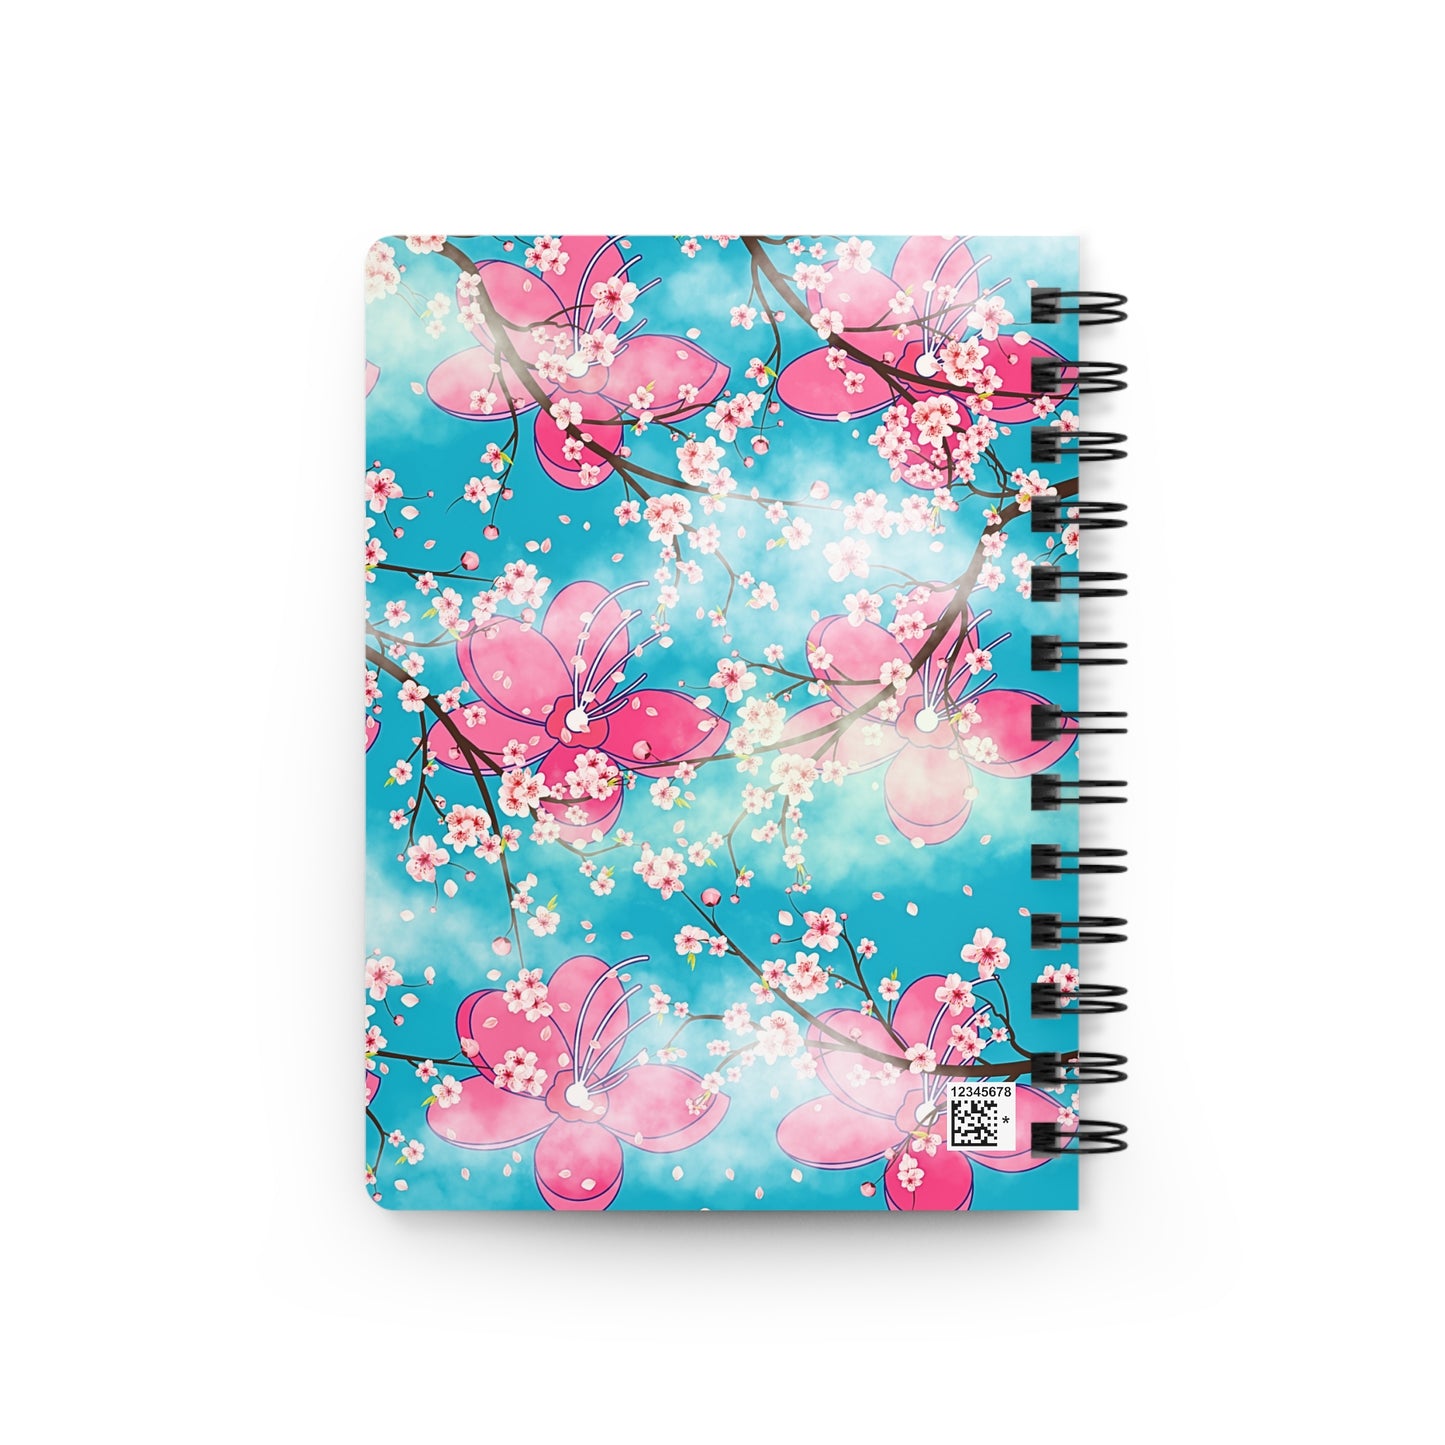 Meguro River Cherry Blossom Flower Japan Writing Sketch Inspiration Spiral Bound Journal